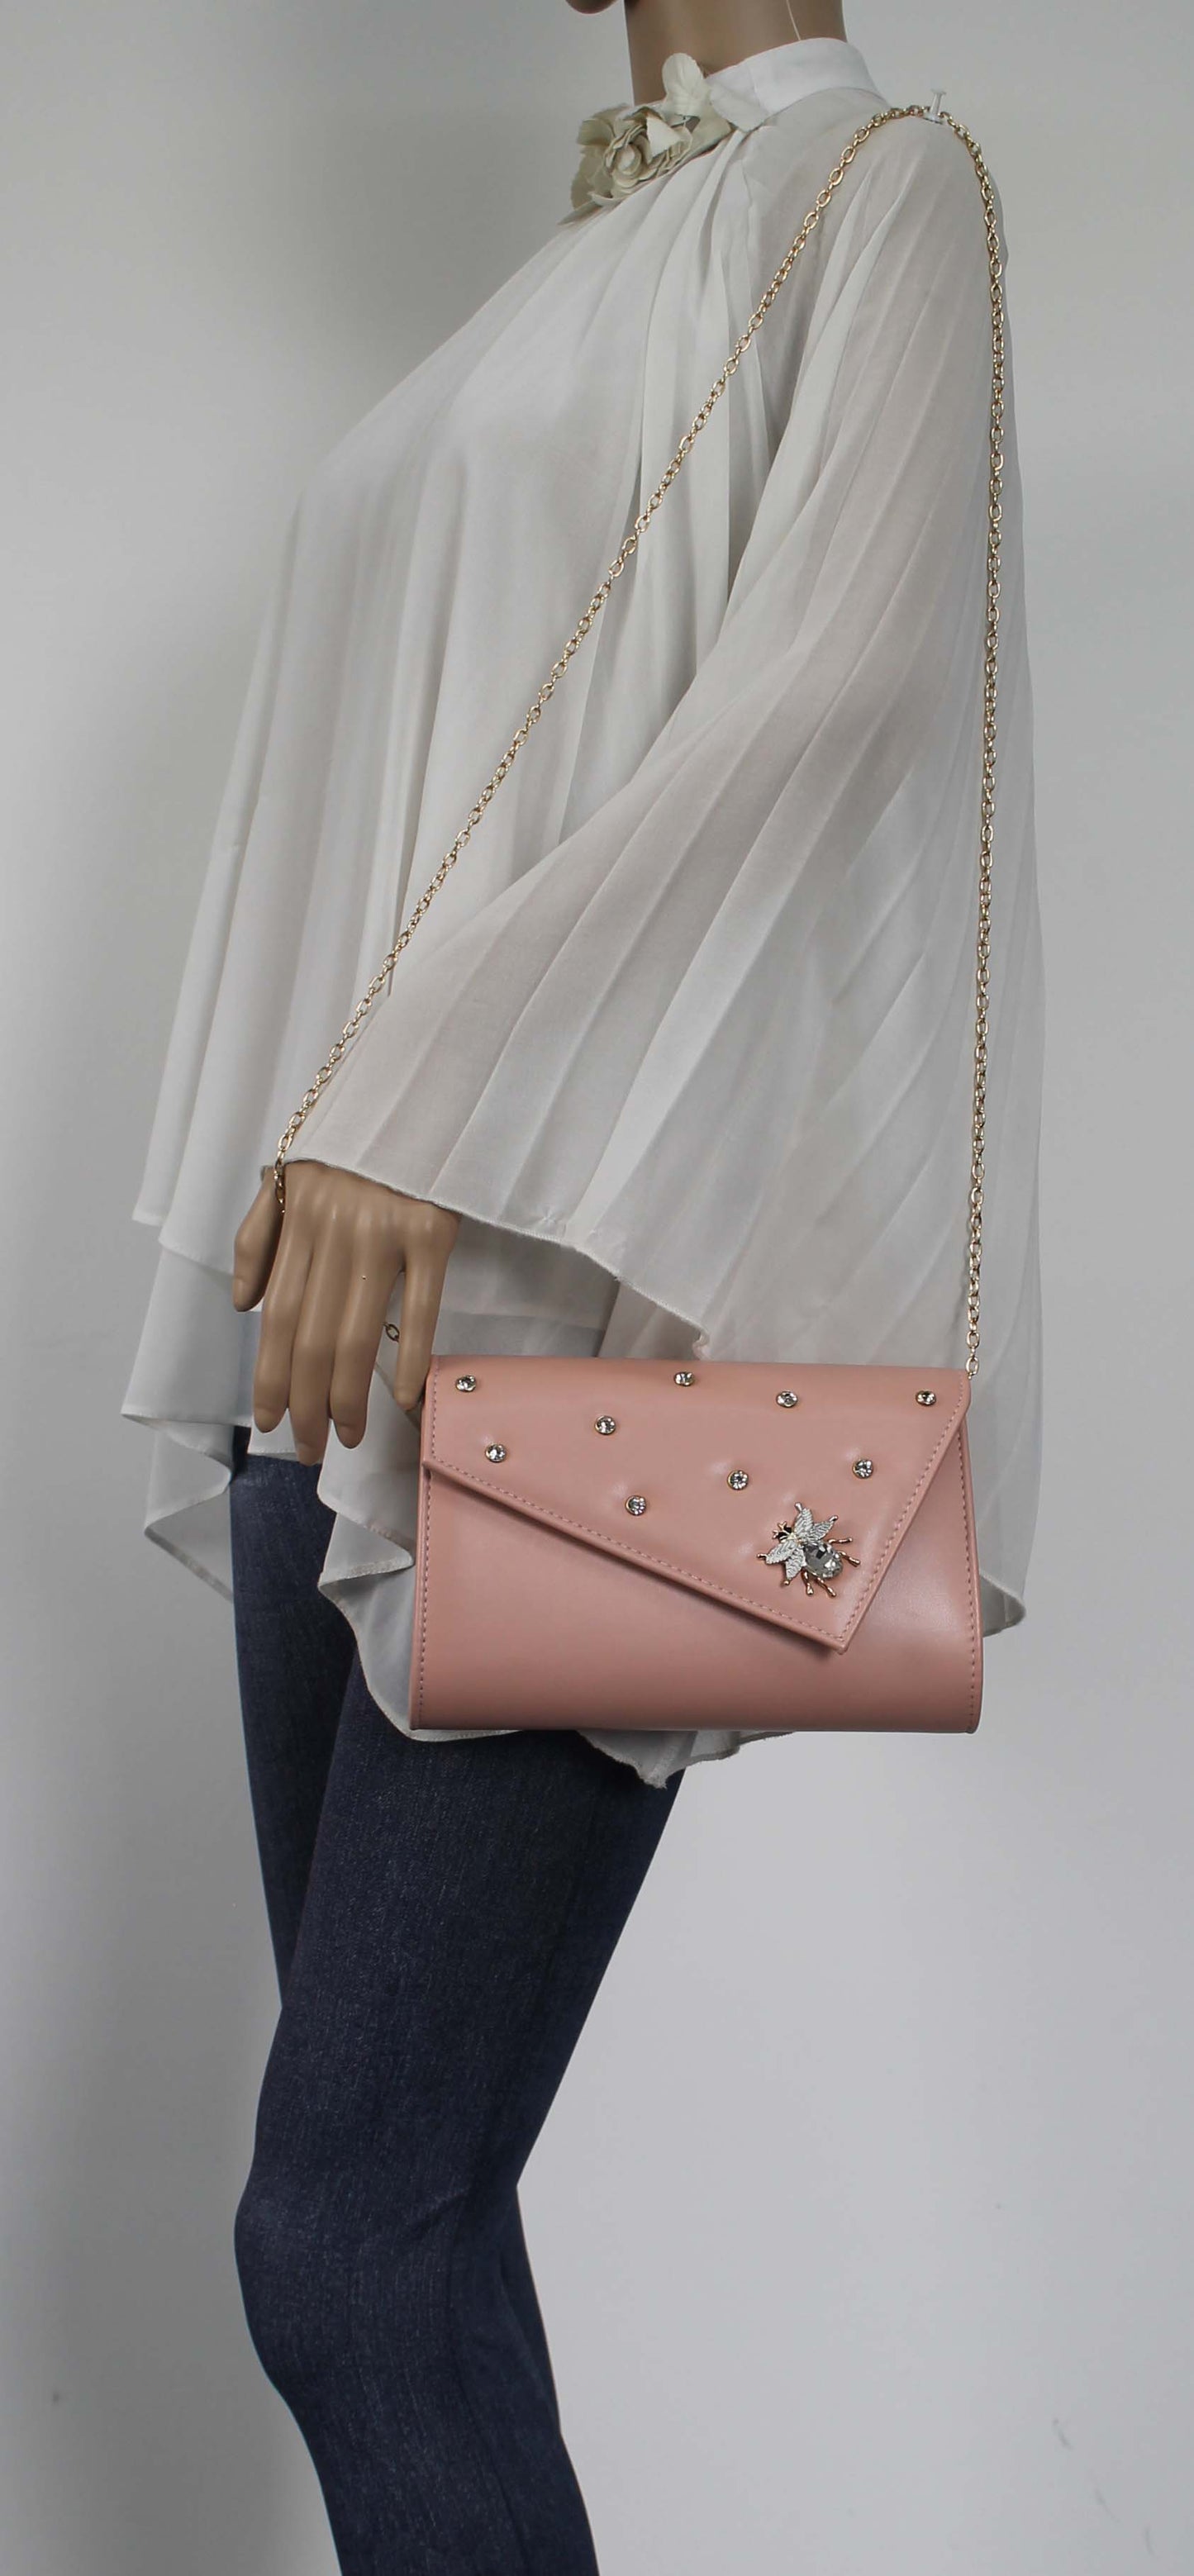 SWANKYSWANS Nylah Clutch Bag Pink Cute Cheap Clutch Bag For Weddings School and Work